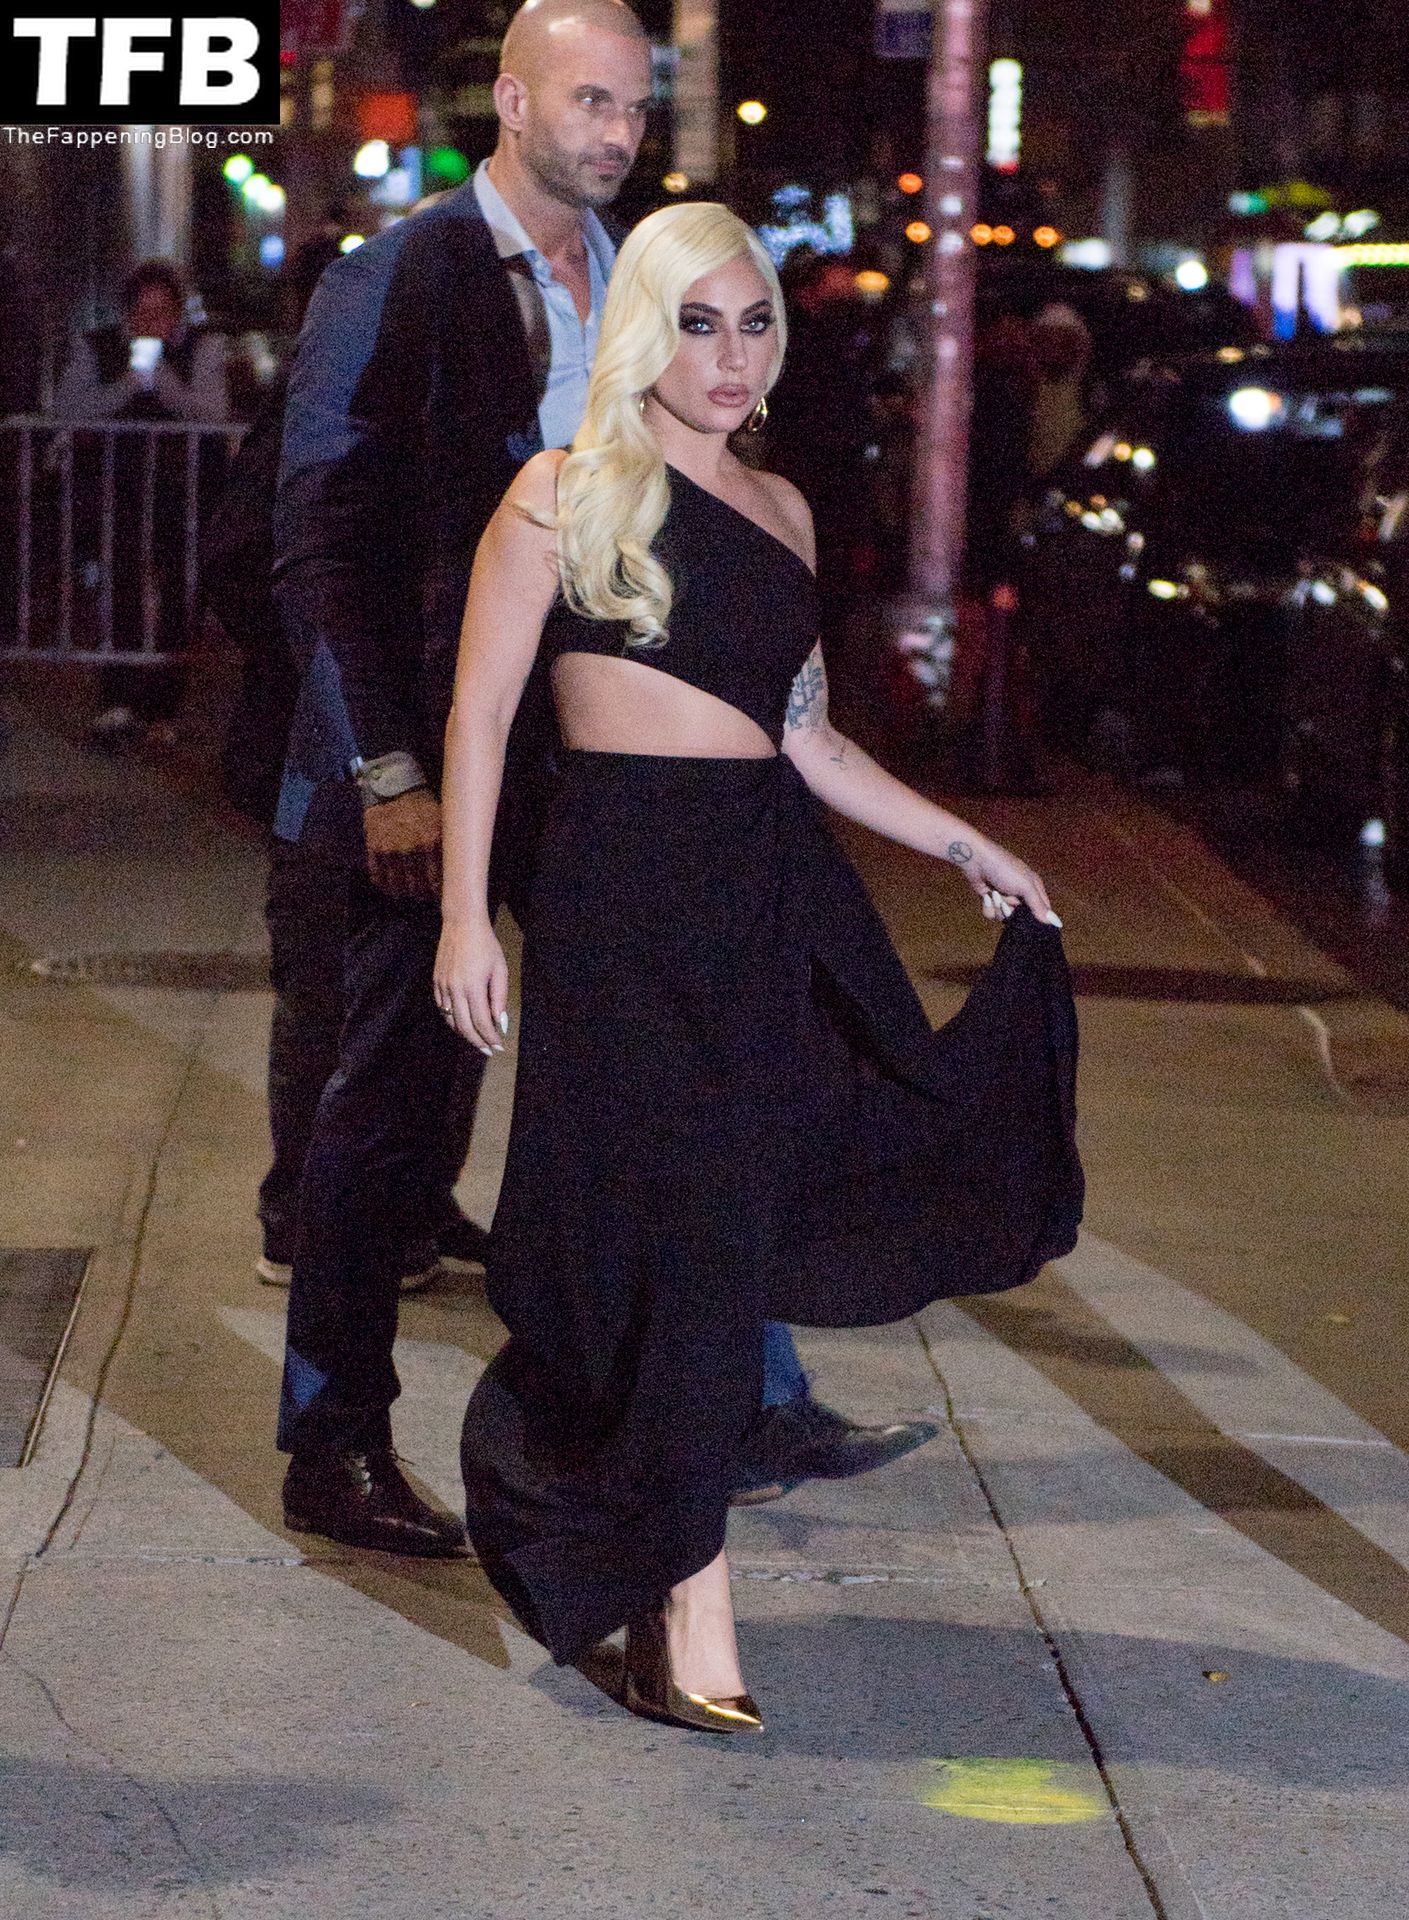 Lady-Gaga-Sexy-The-Fappening-Blog-58-1.jpg